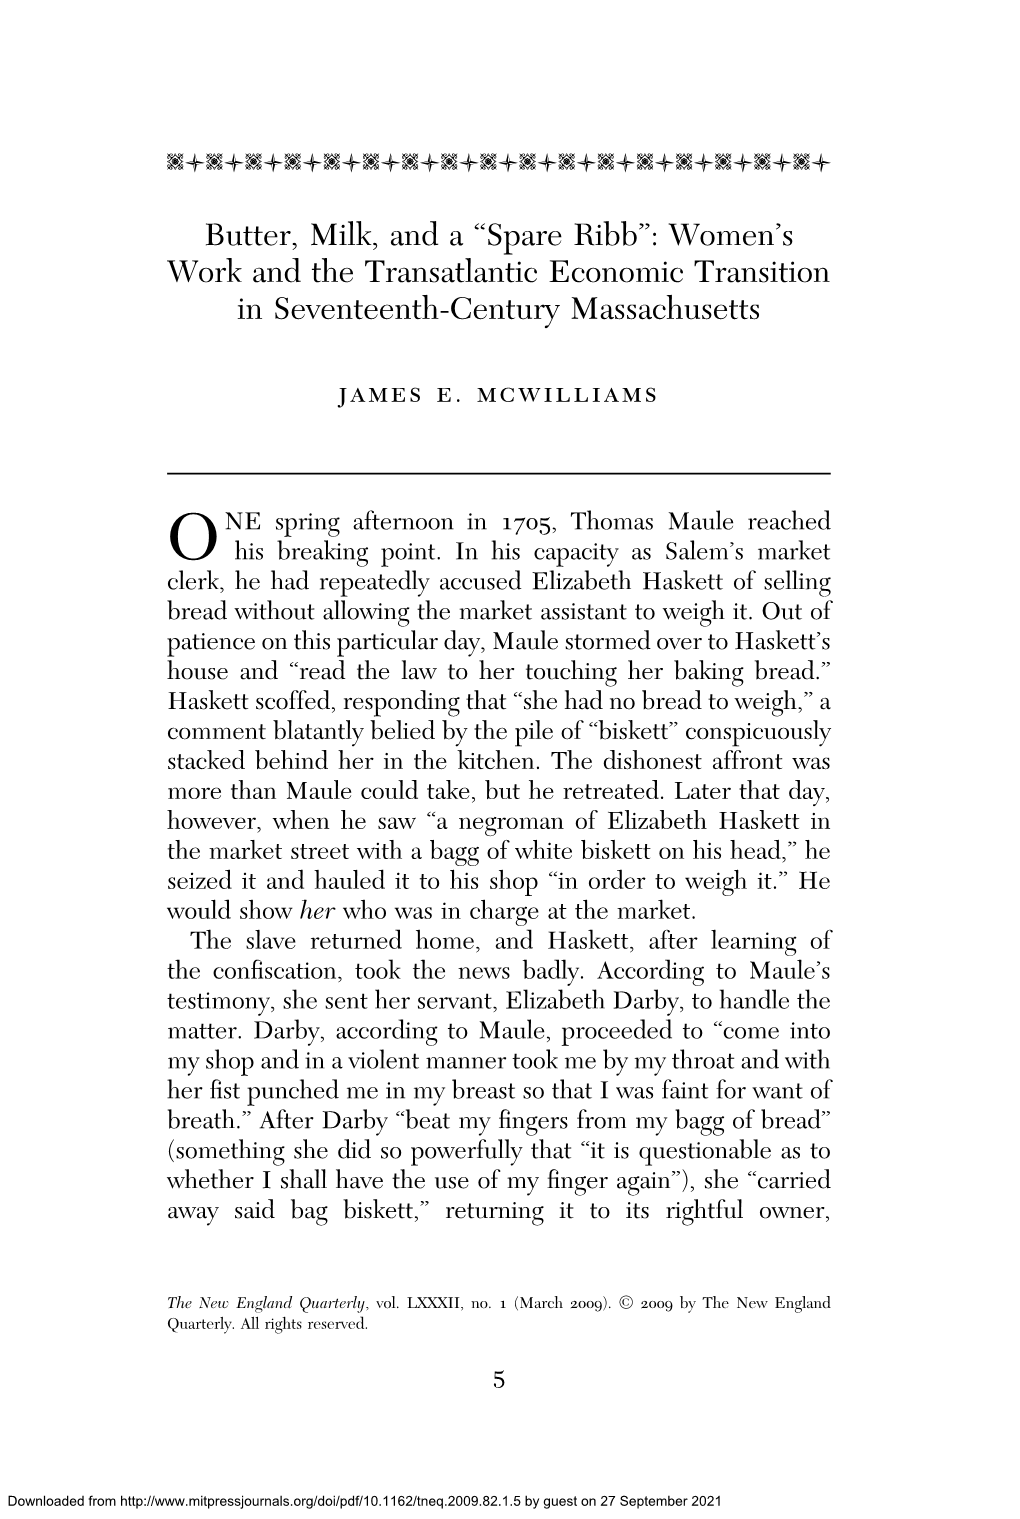 Women's Work and the Transatlantic Economic Transition In